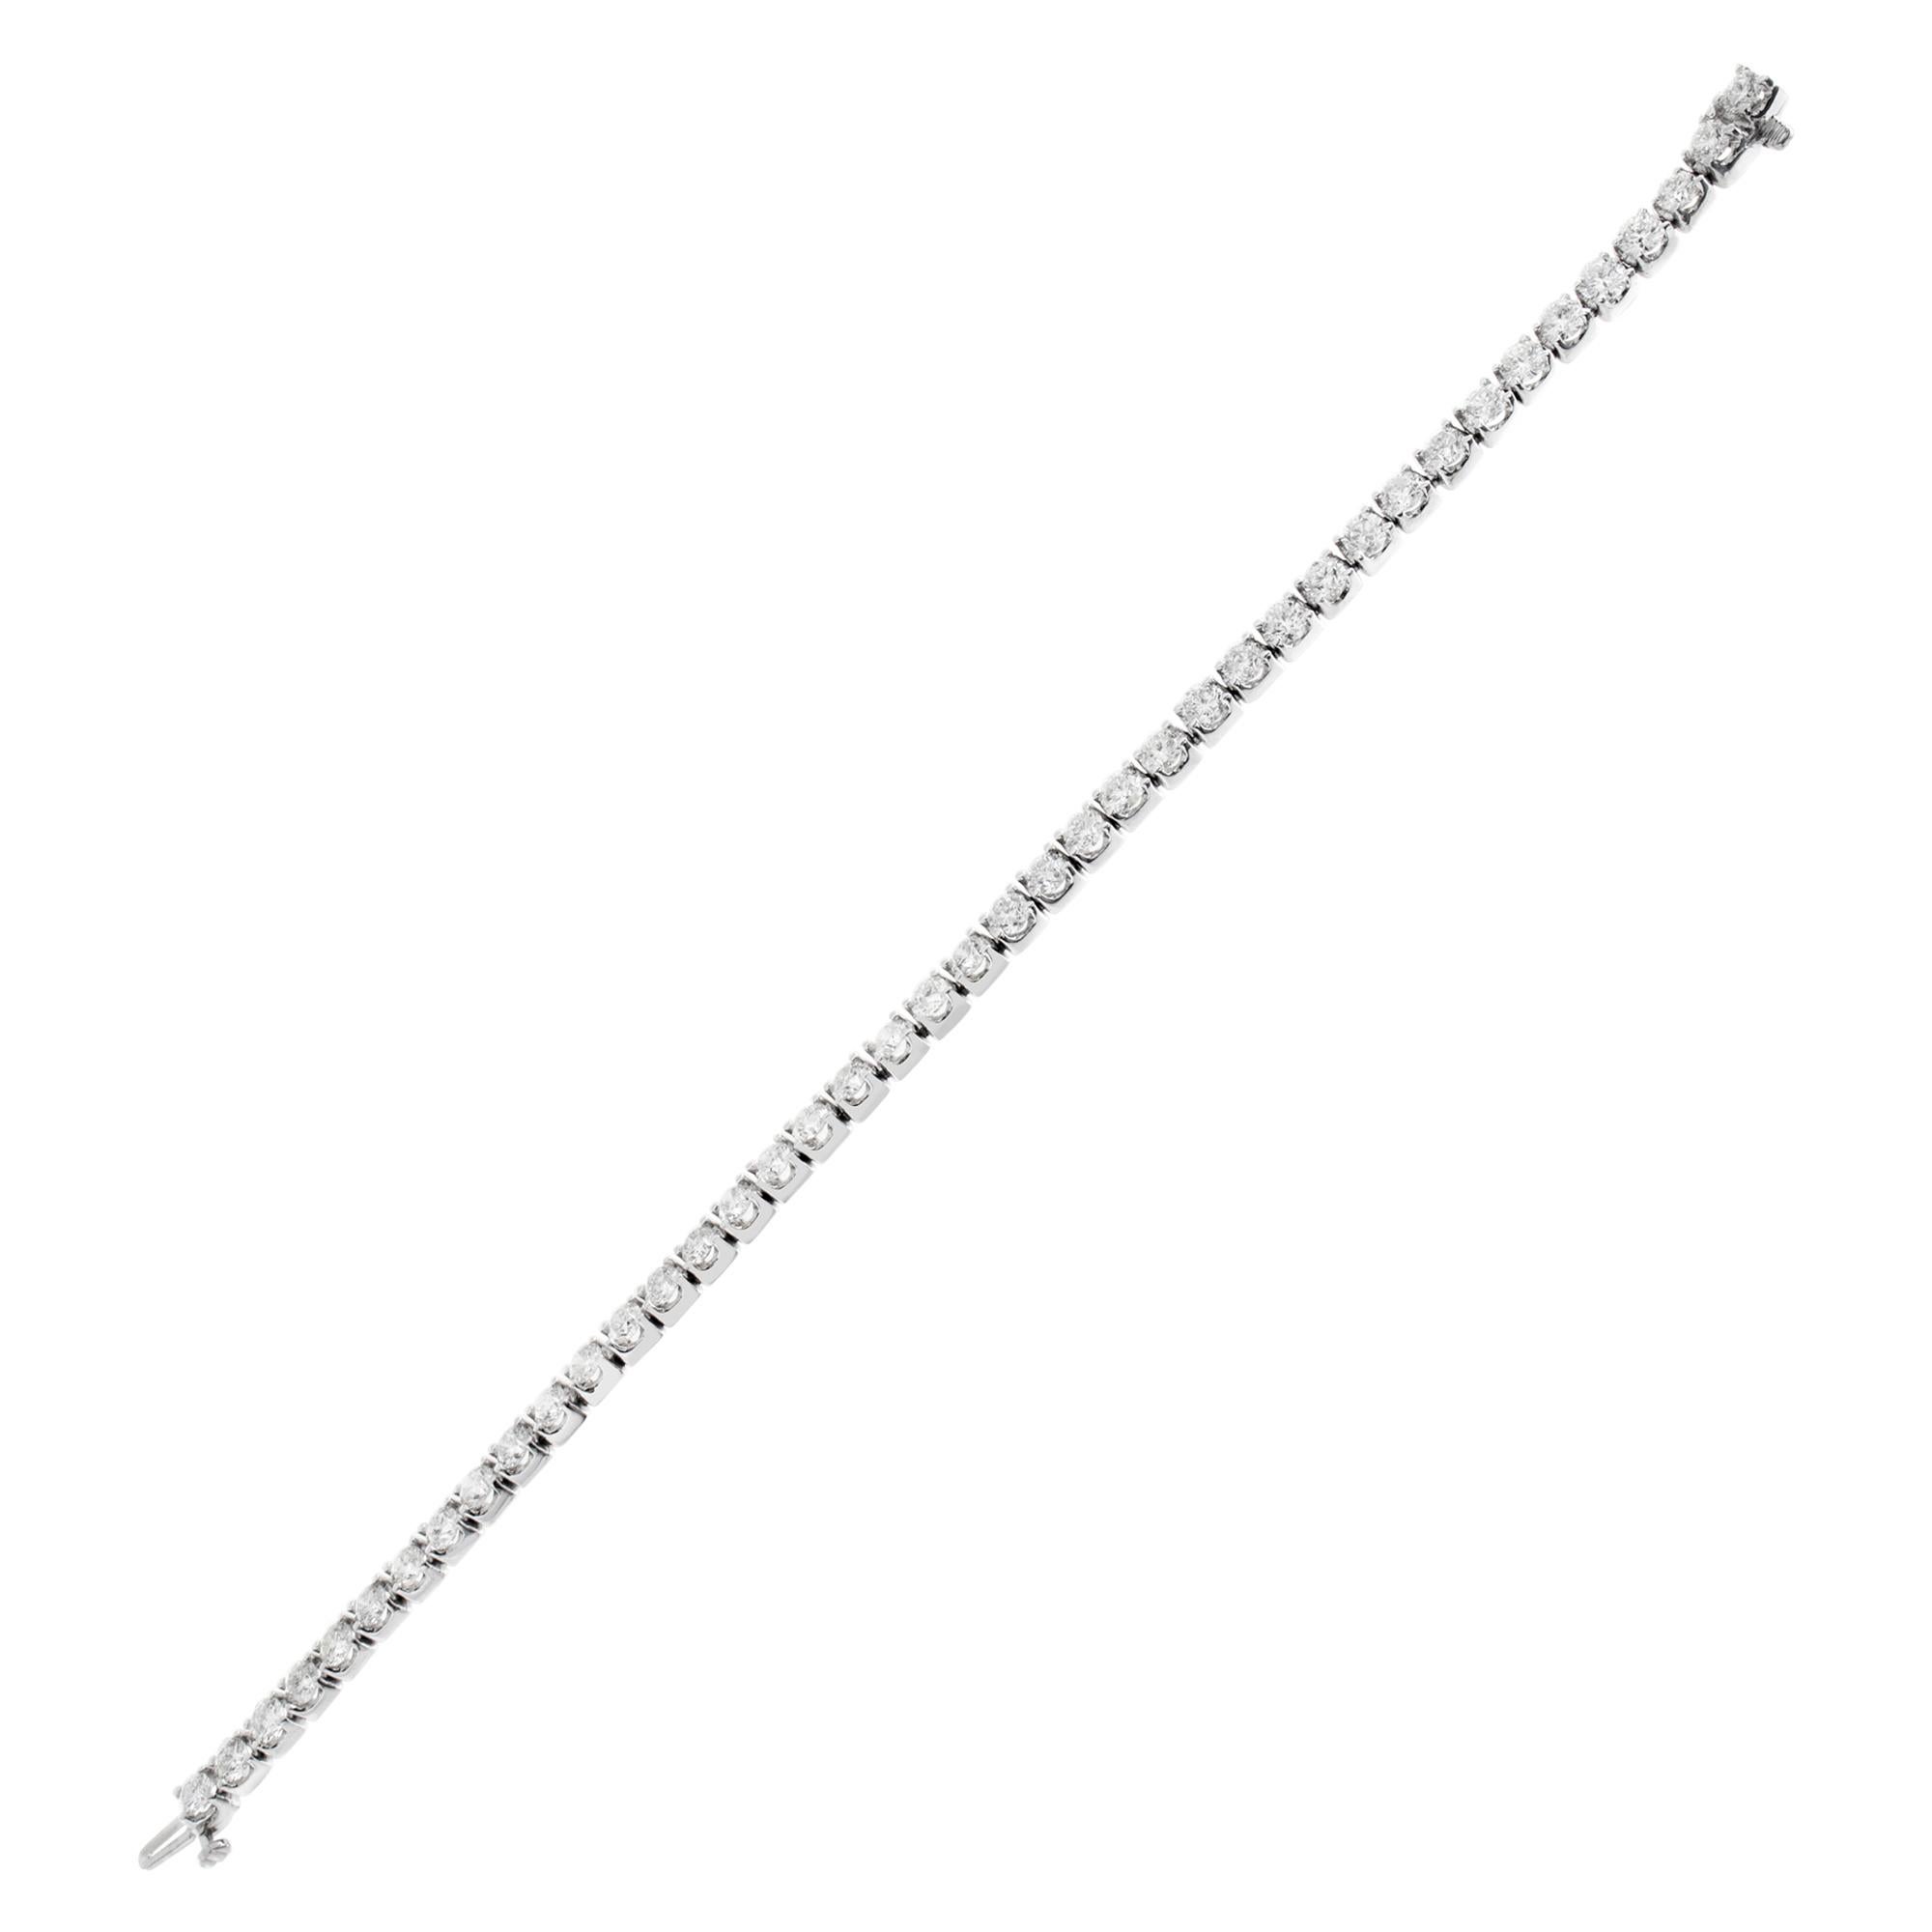 Line Diamond Bracelet with 8.09 Carat Full Cut Round Diamonds Set For Sale 1